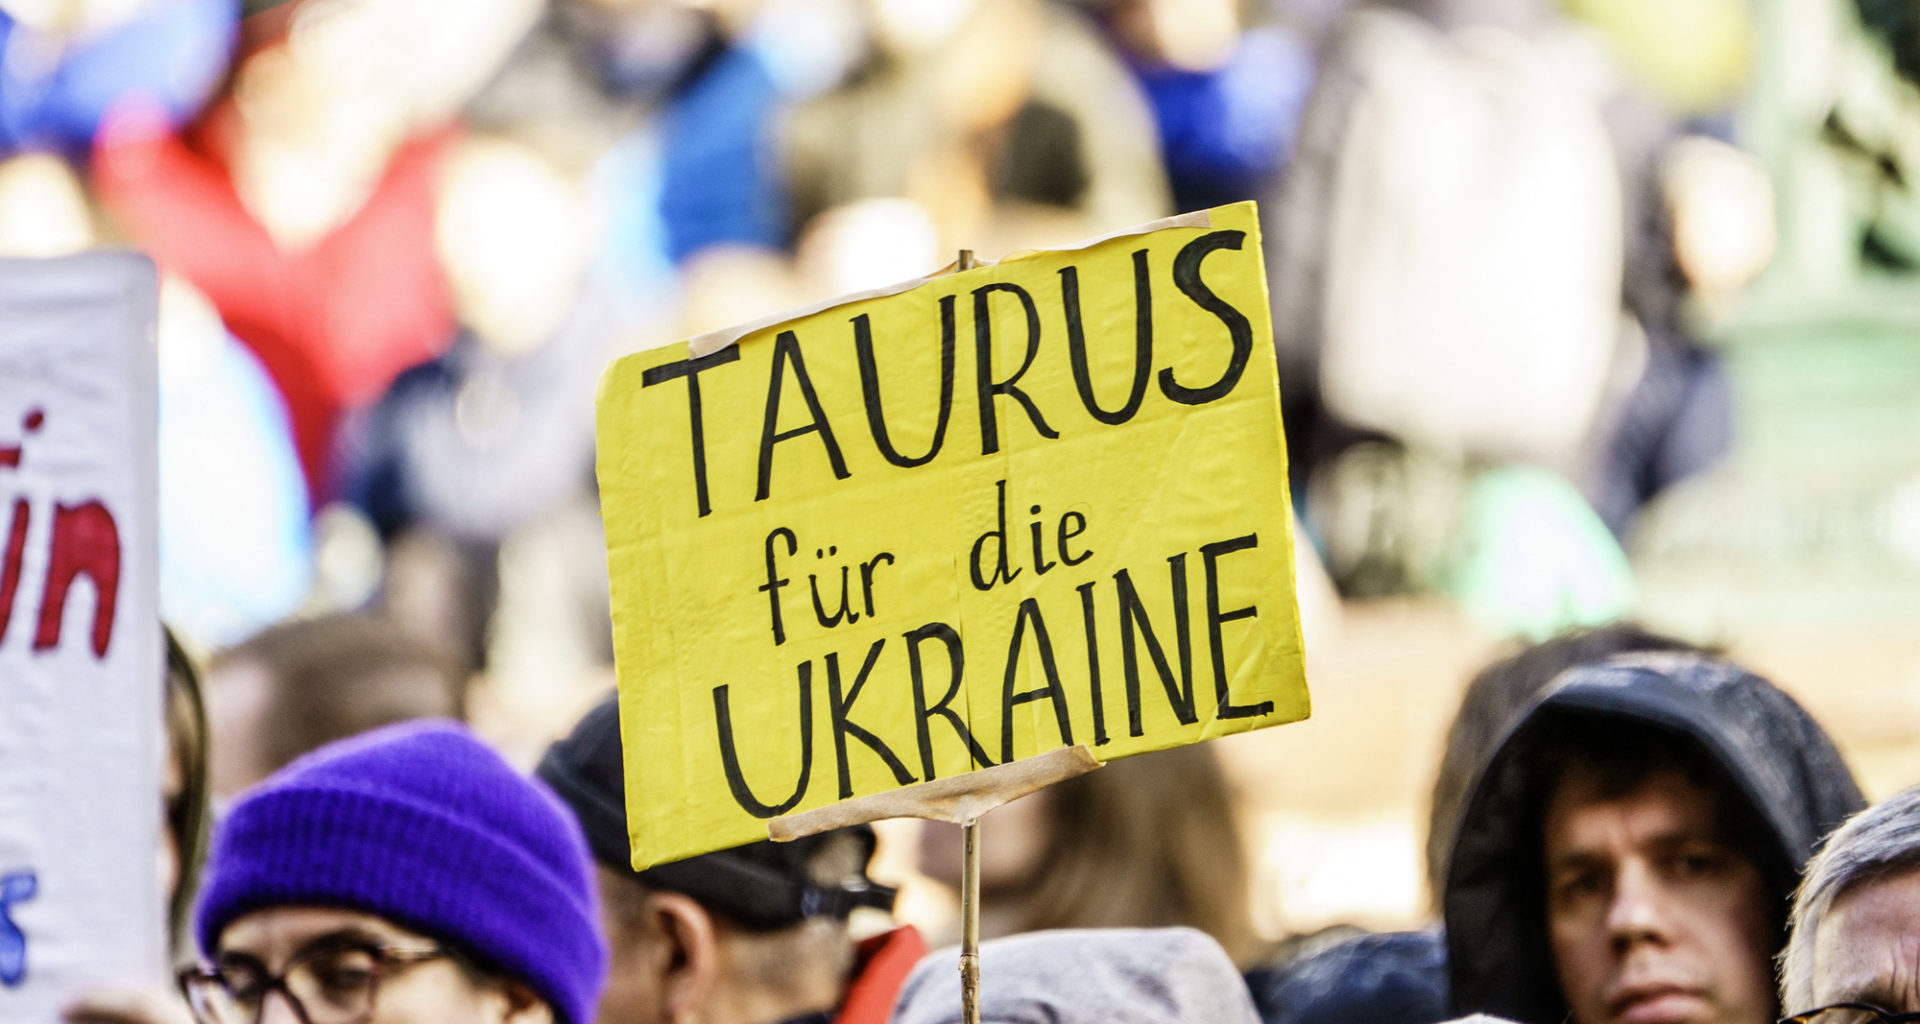 Taurus for ukraine germany